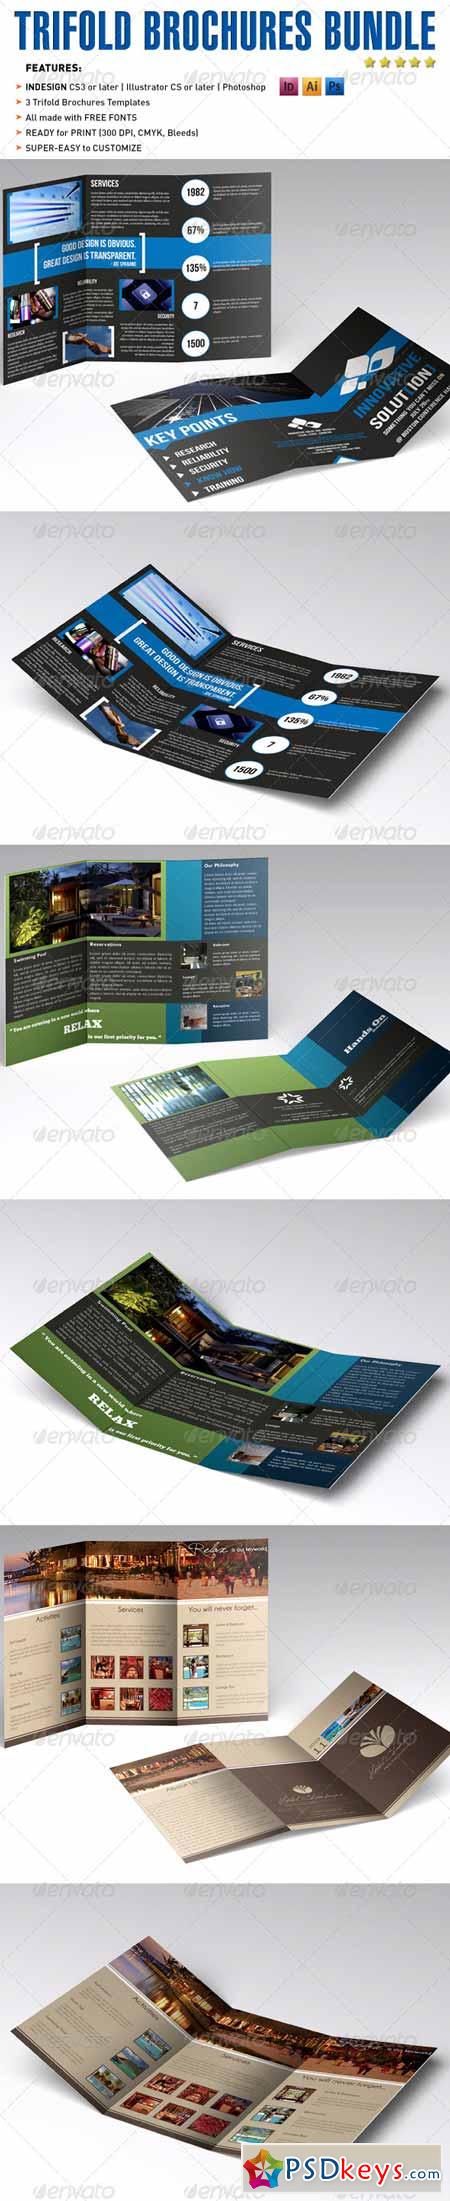 Trifold Brochures Bundle 501425